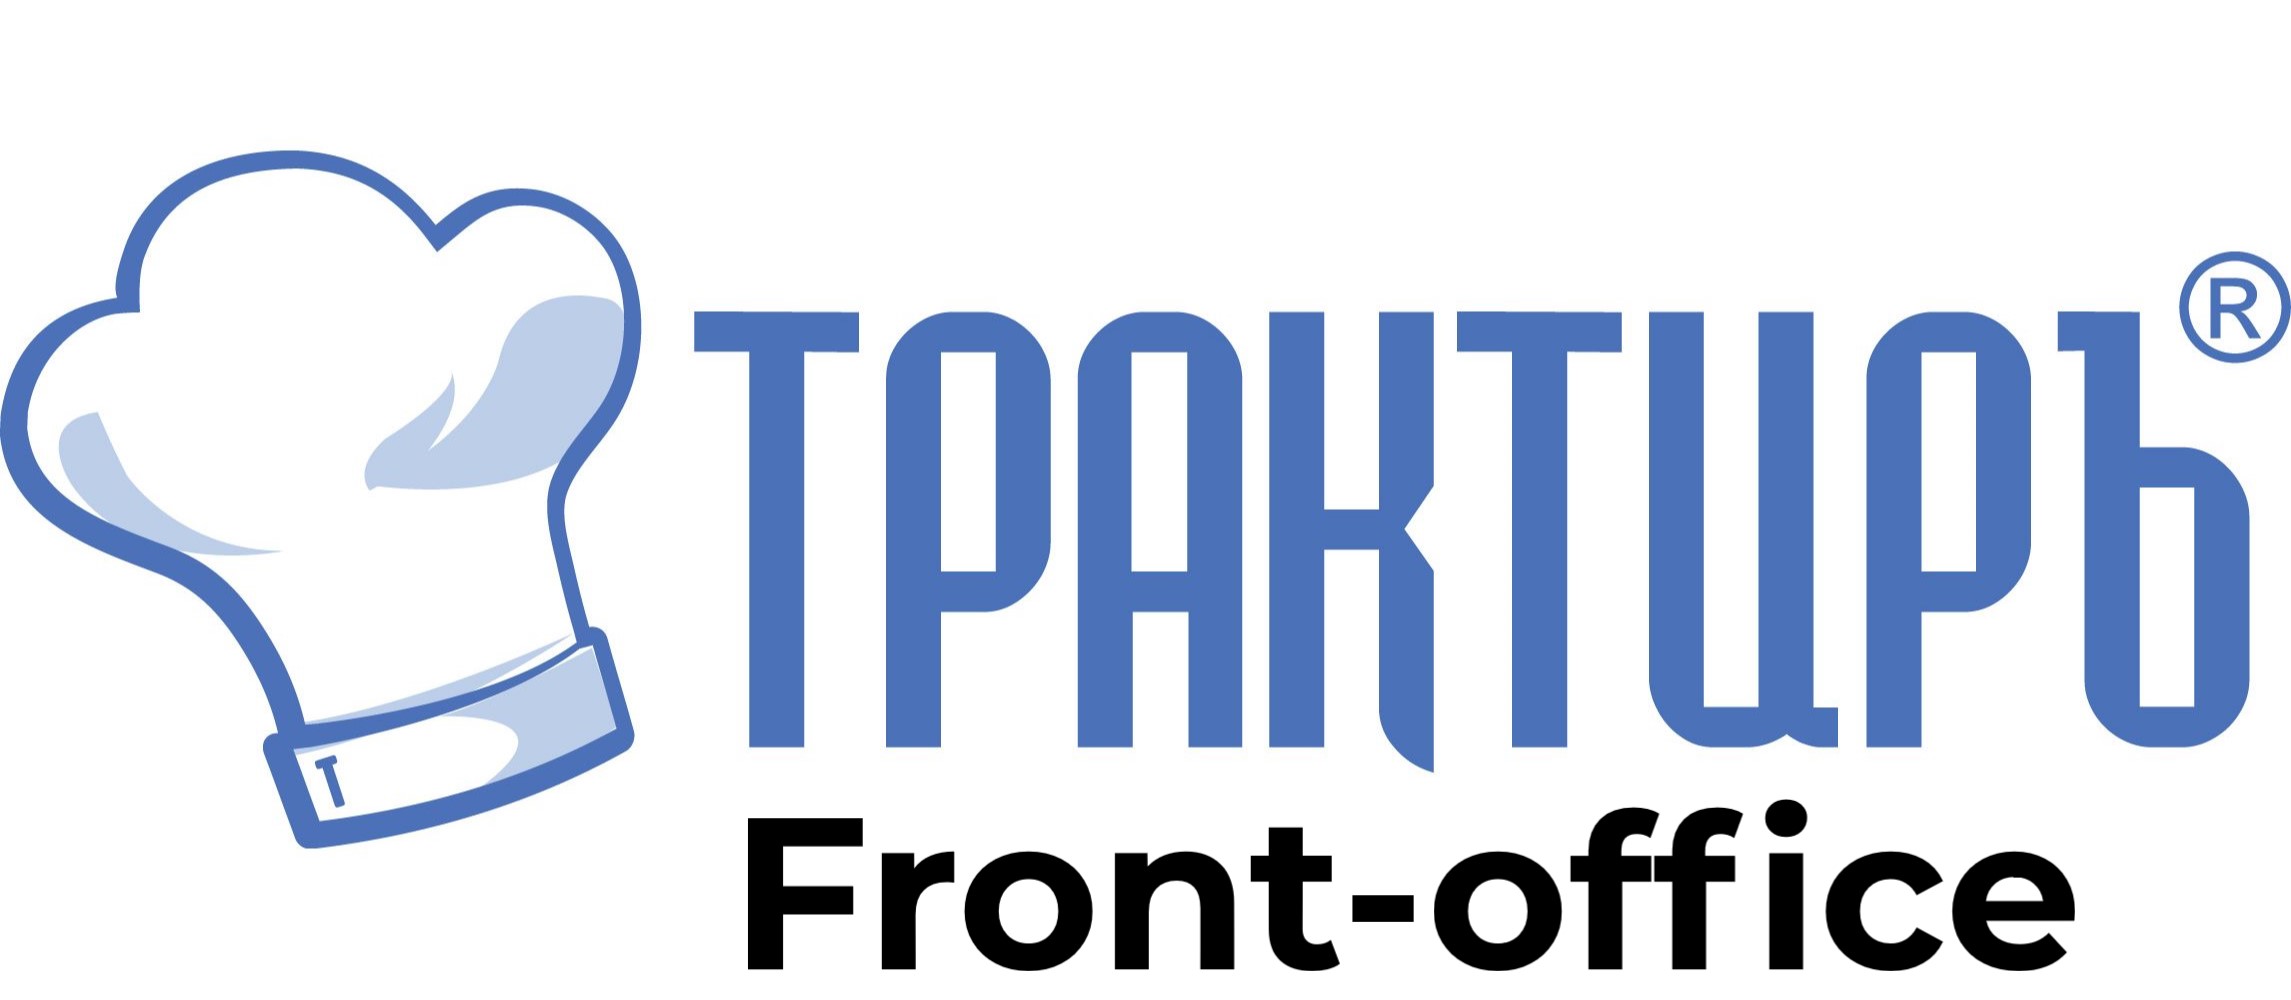 Трактиръ: Front-Office v4.5  Основная поставка в Петрозаводске